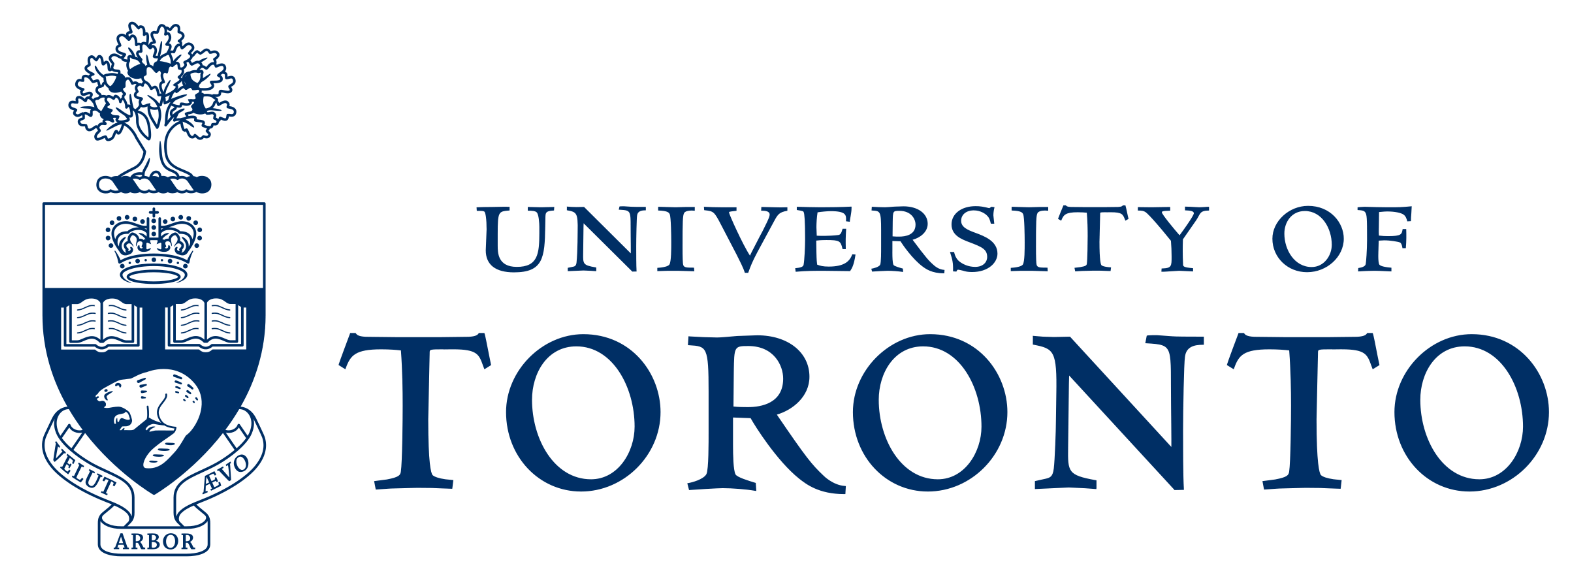 University of toronto logo.wine